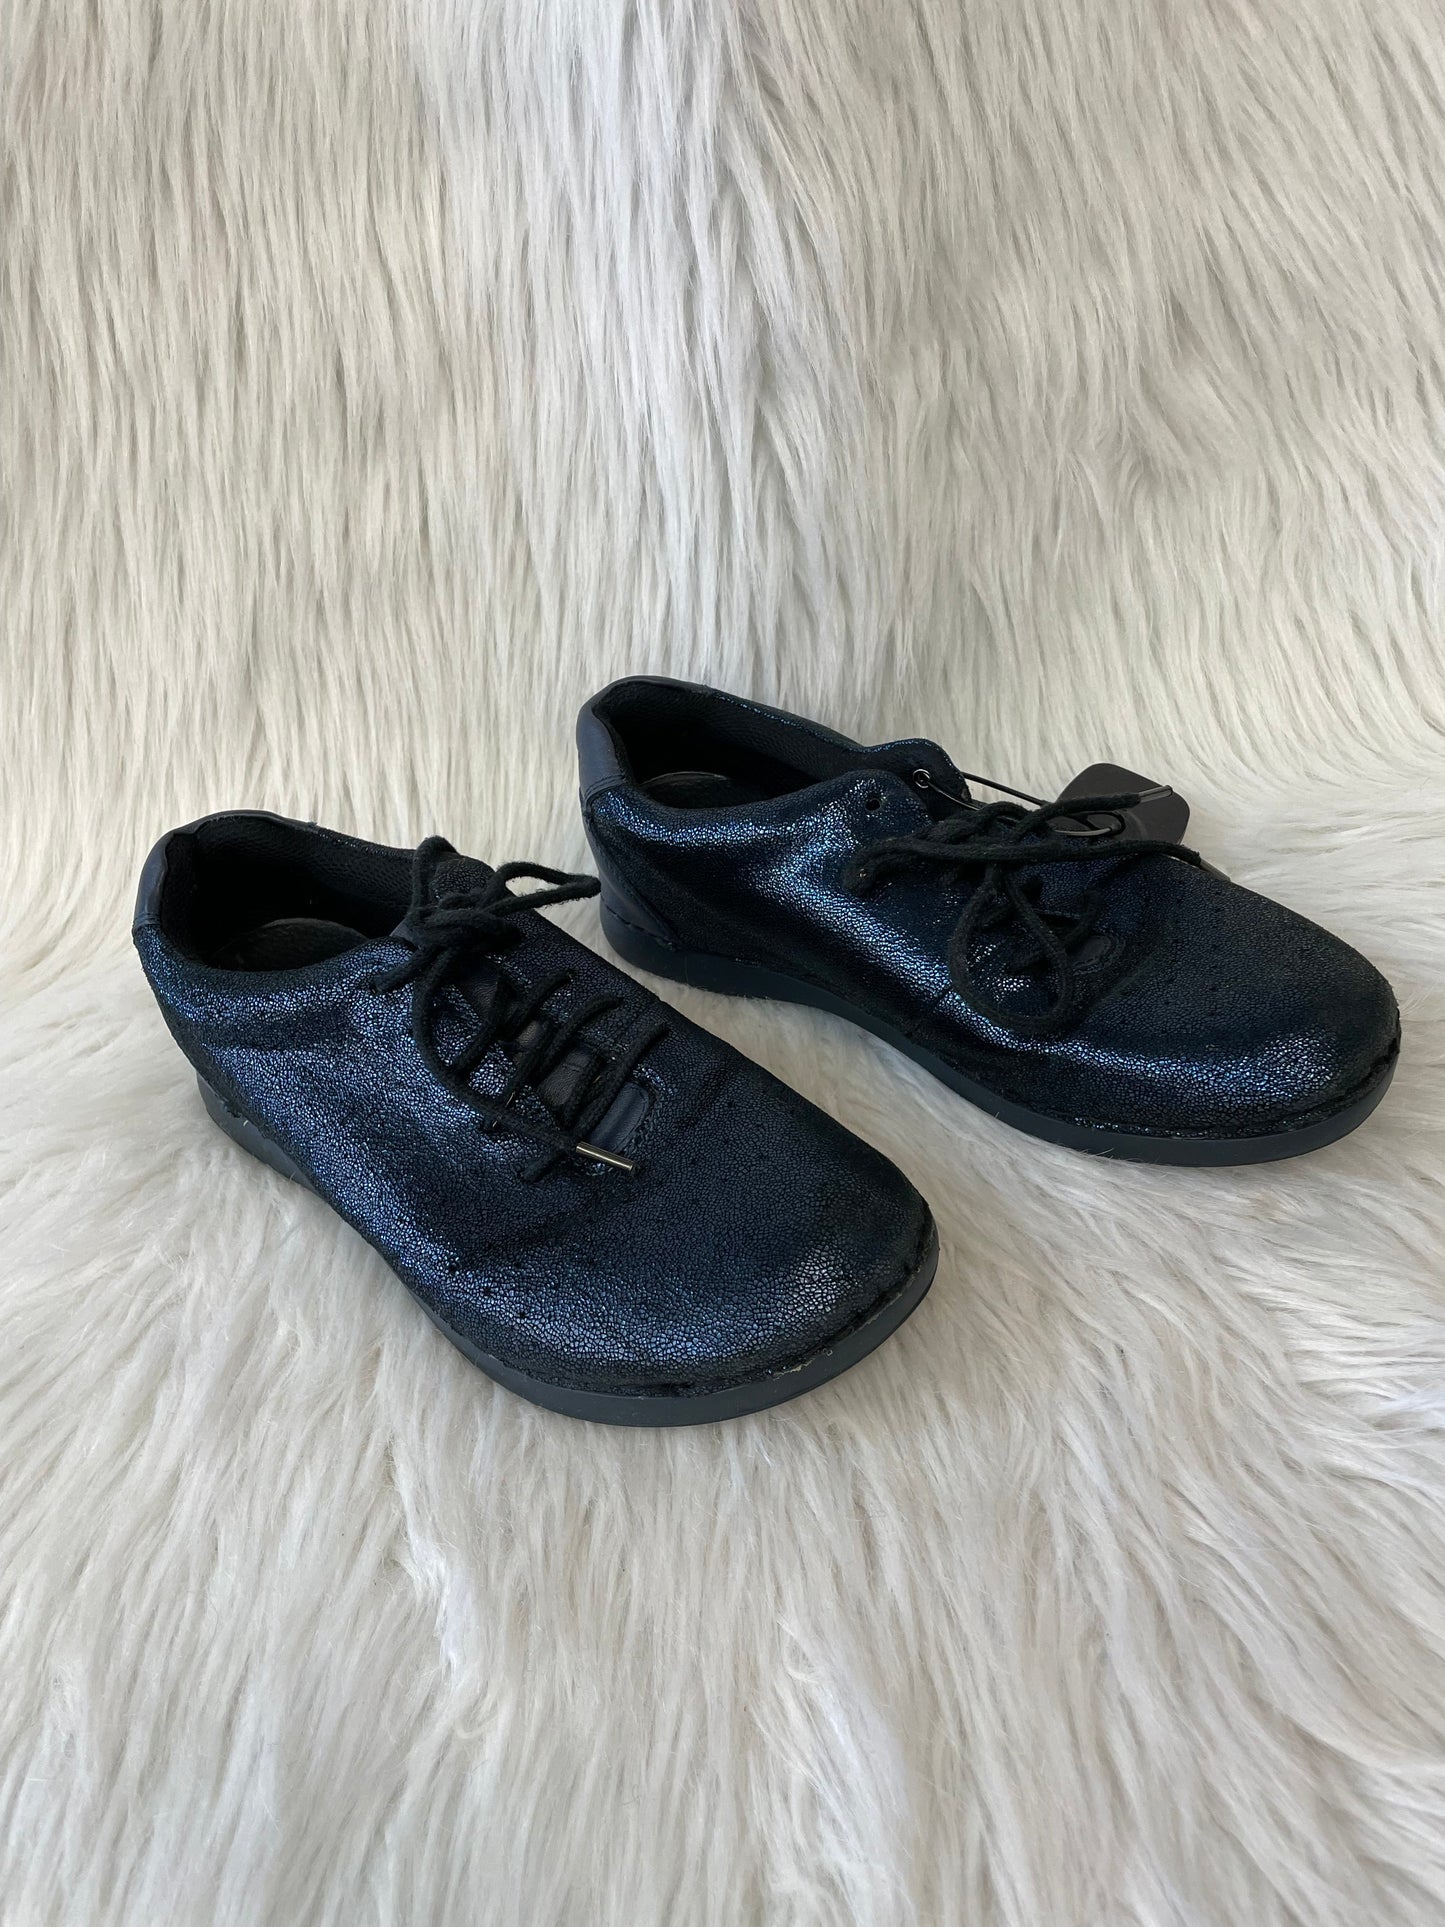 Navy Shoes Flats Alegria, Size 6.5